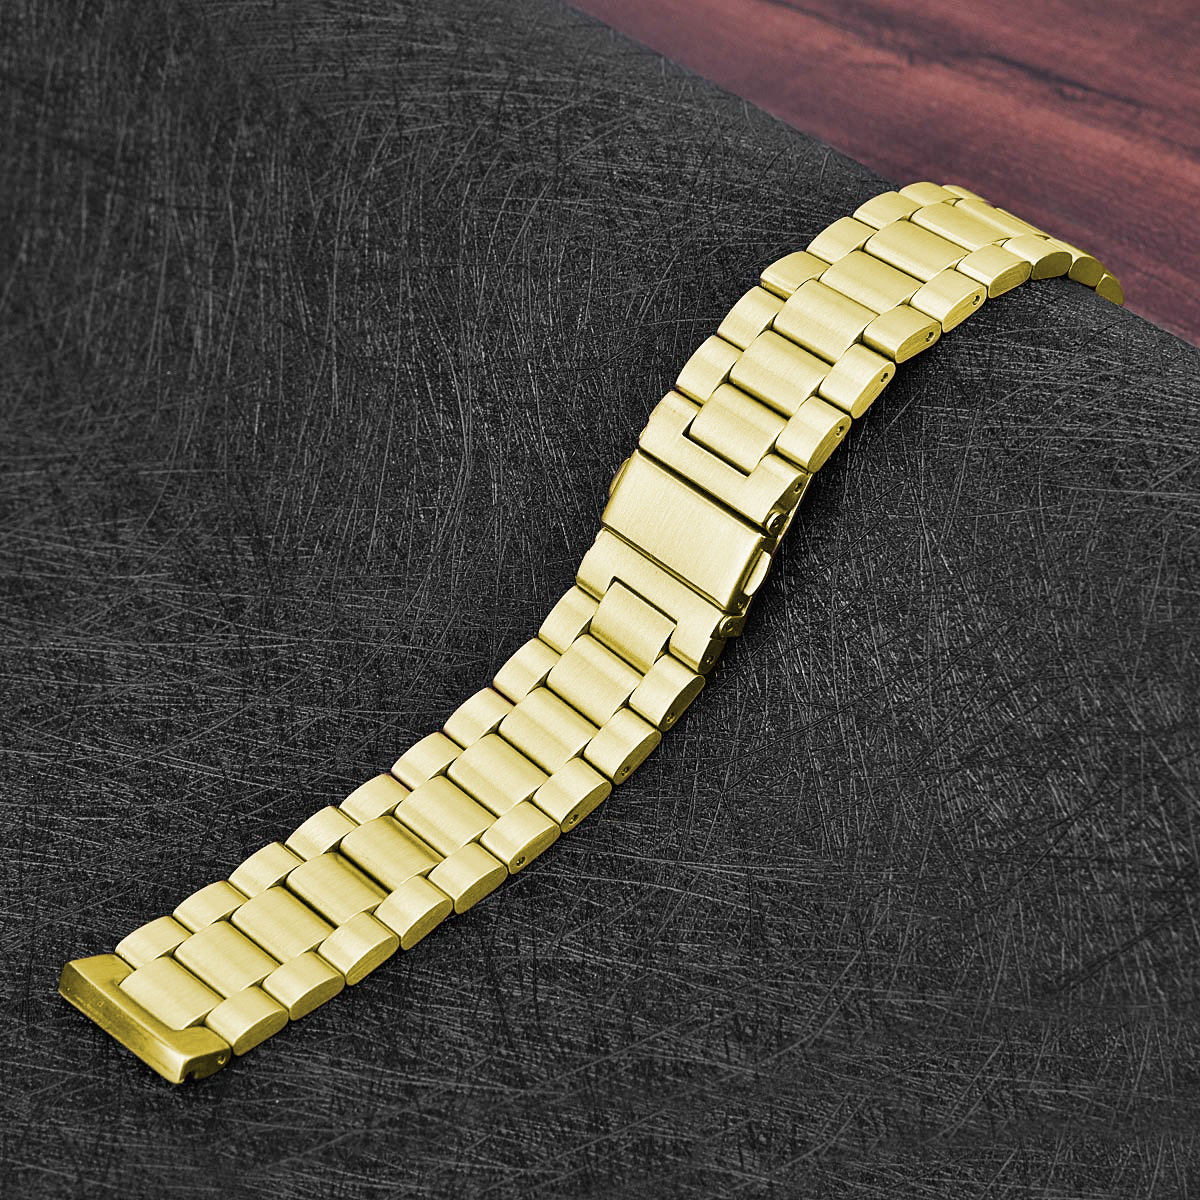 Fitbit Versa kralen stalen schakel band - goud